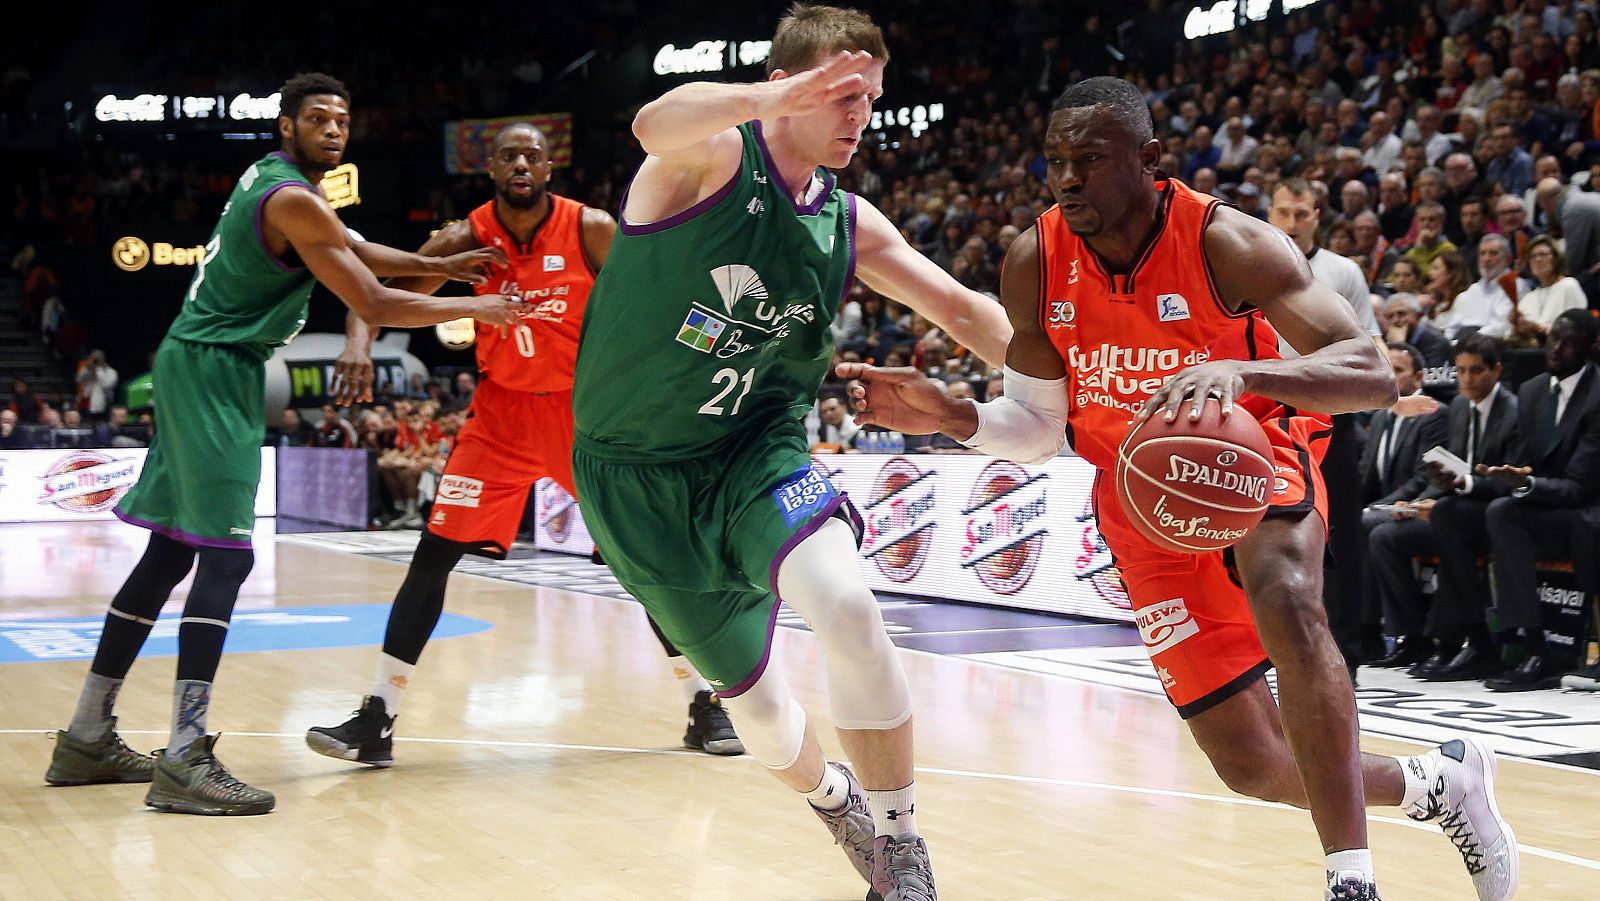 El alero centroafricano del Valencia Basket Romain Sato trata de vencer la defensa del alero polaco del Unicaja Adam Wacynski.